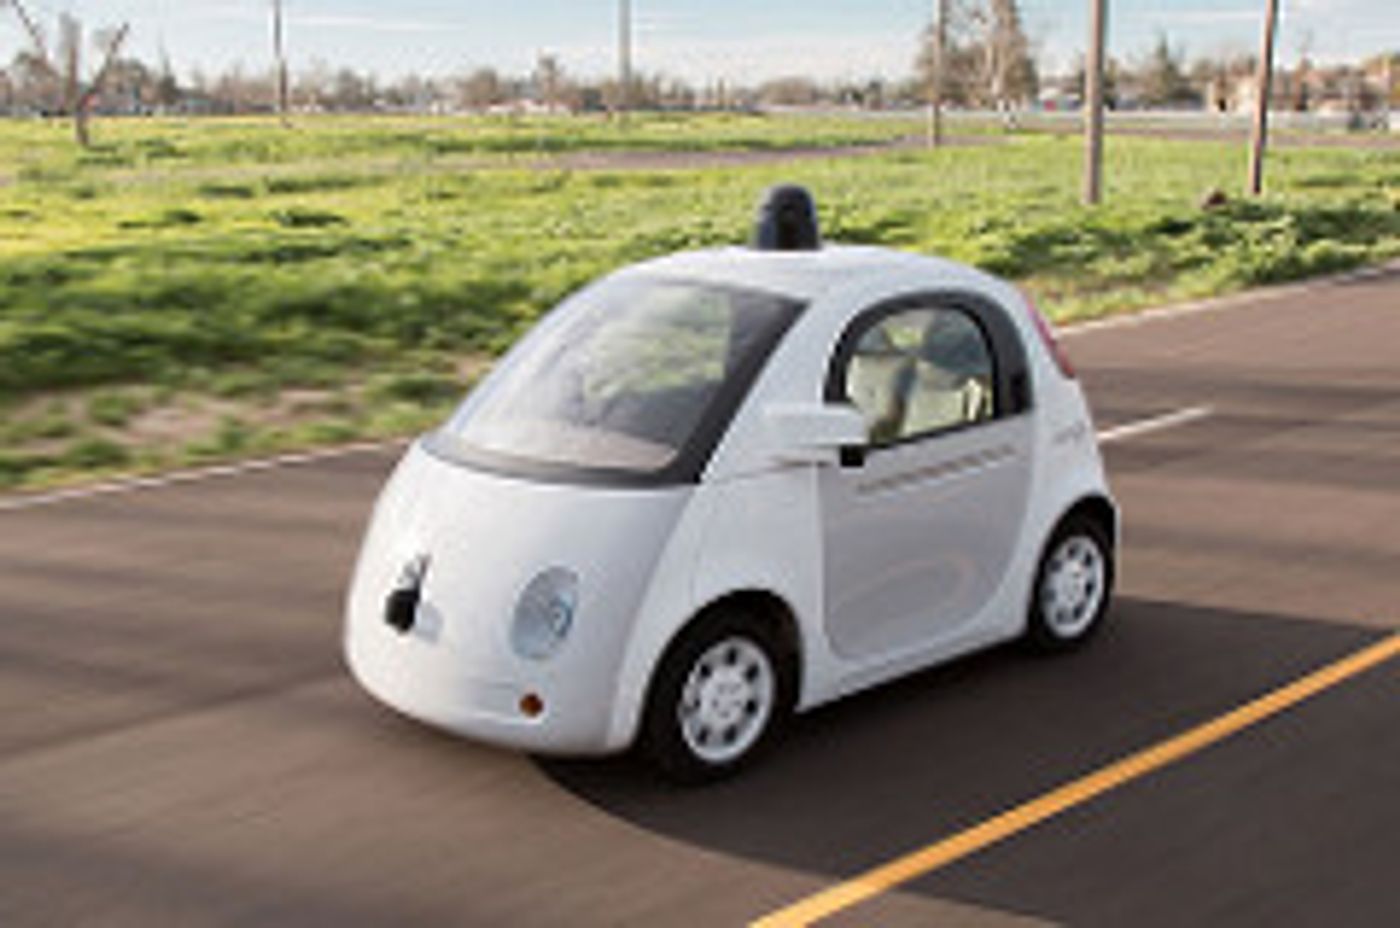 Google self-driving car, credit: Marc van der Chijs on Flickr